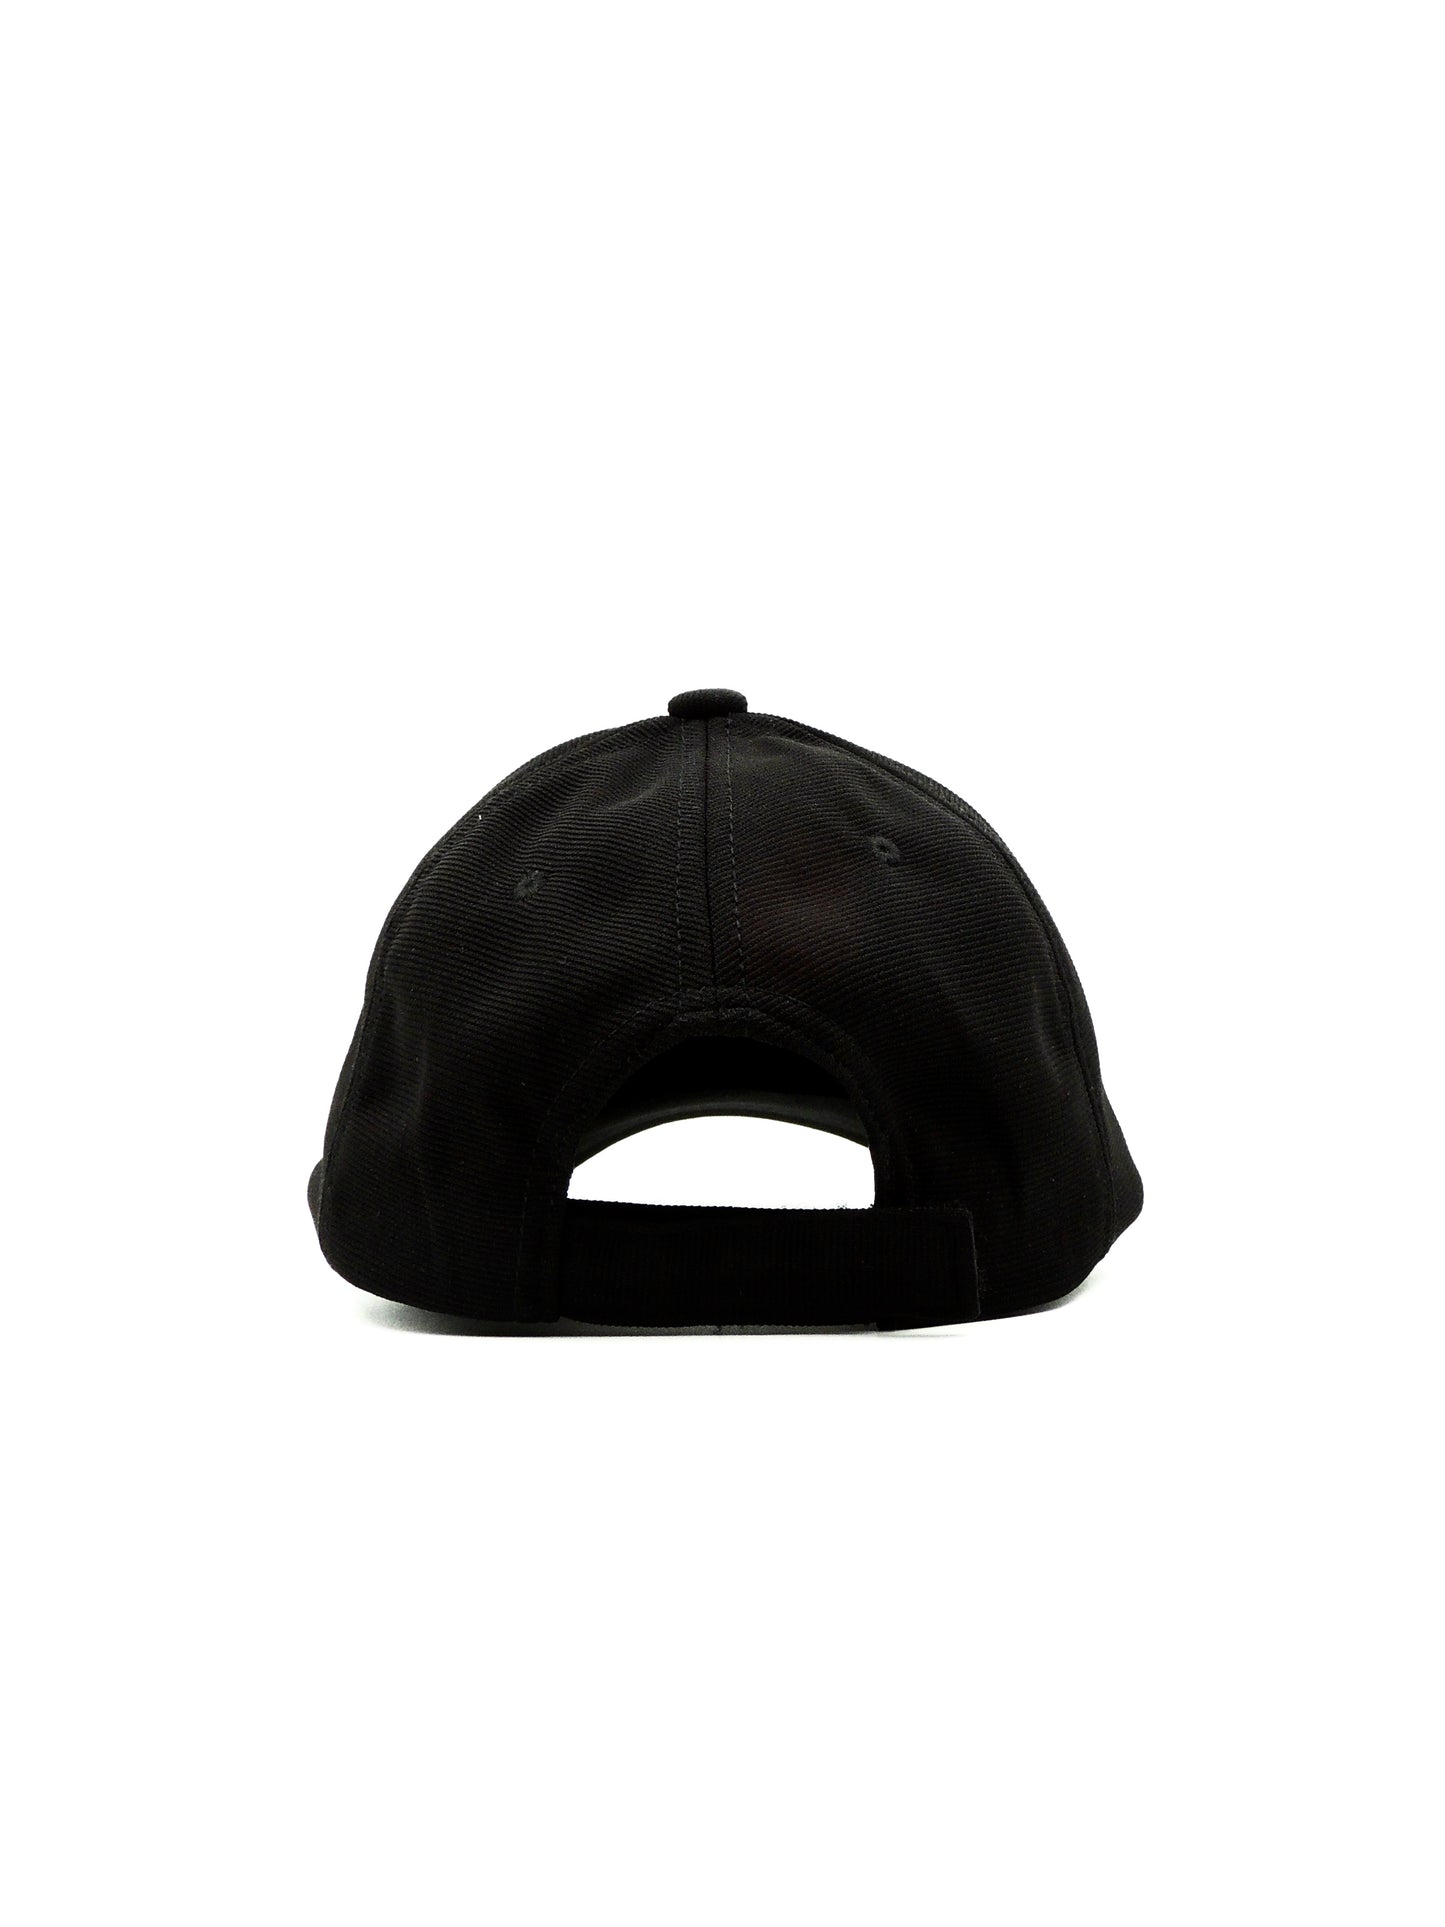 [keyword]-One Word StoreDri-Fit Classic Black Cap